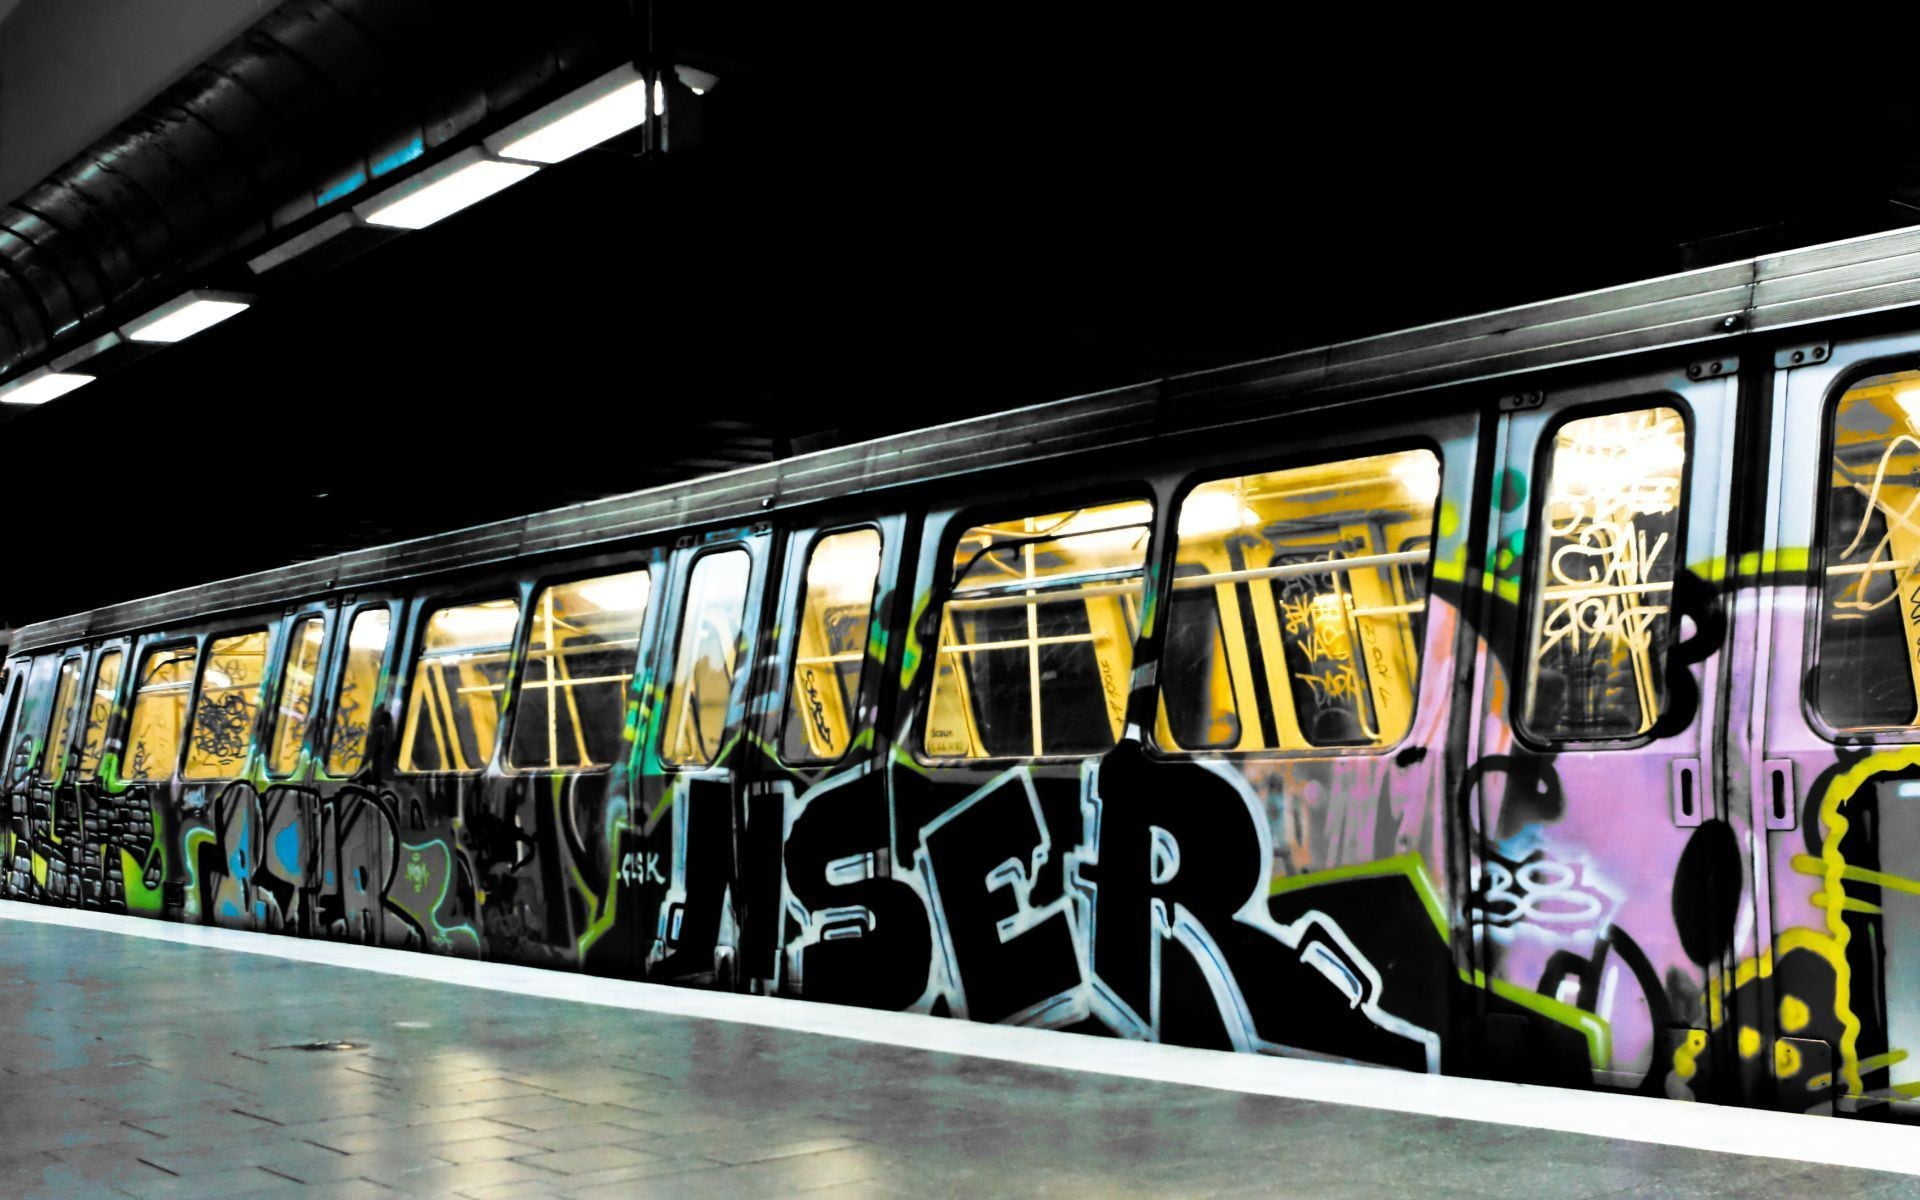 assorted graffiti, subway, public transportation, train, rail transportation